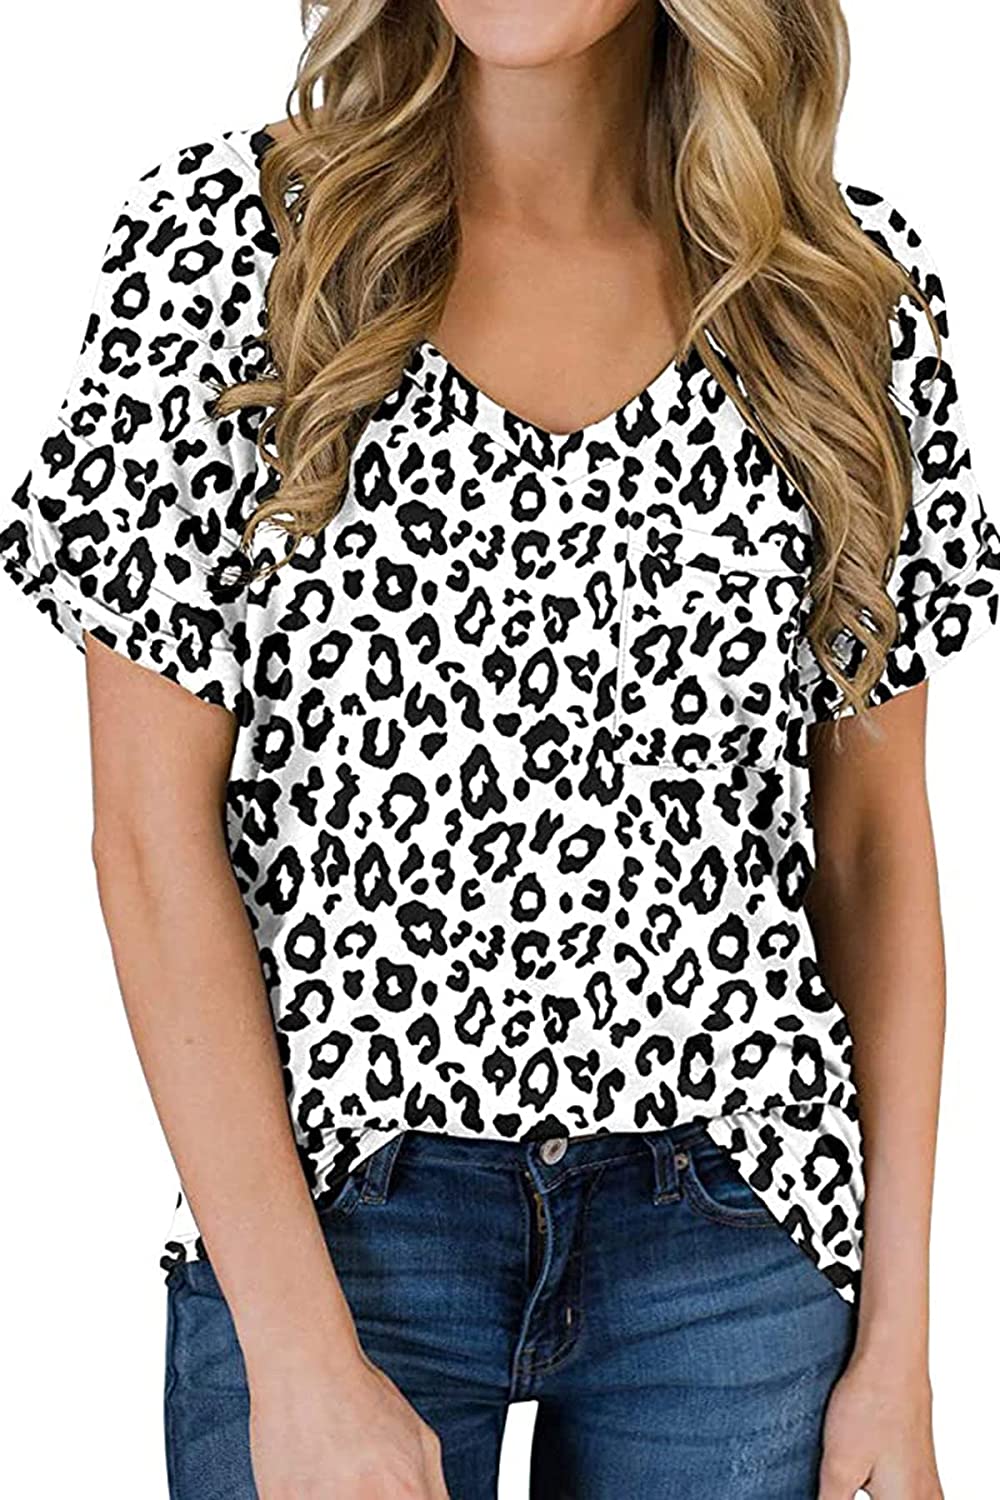 KINGFEN Women's Leopard Cheetah Print Tops Summer Cold Shoulder Twist Knot Animal Print Shirts 